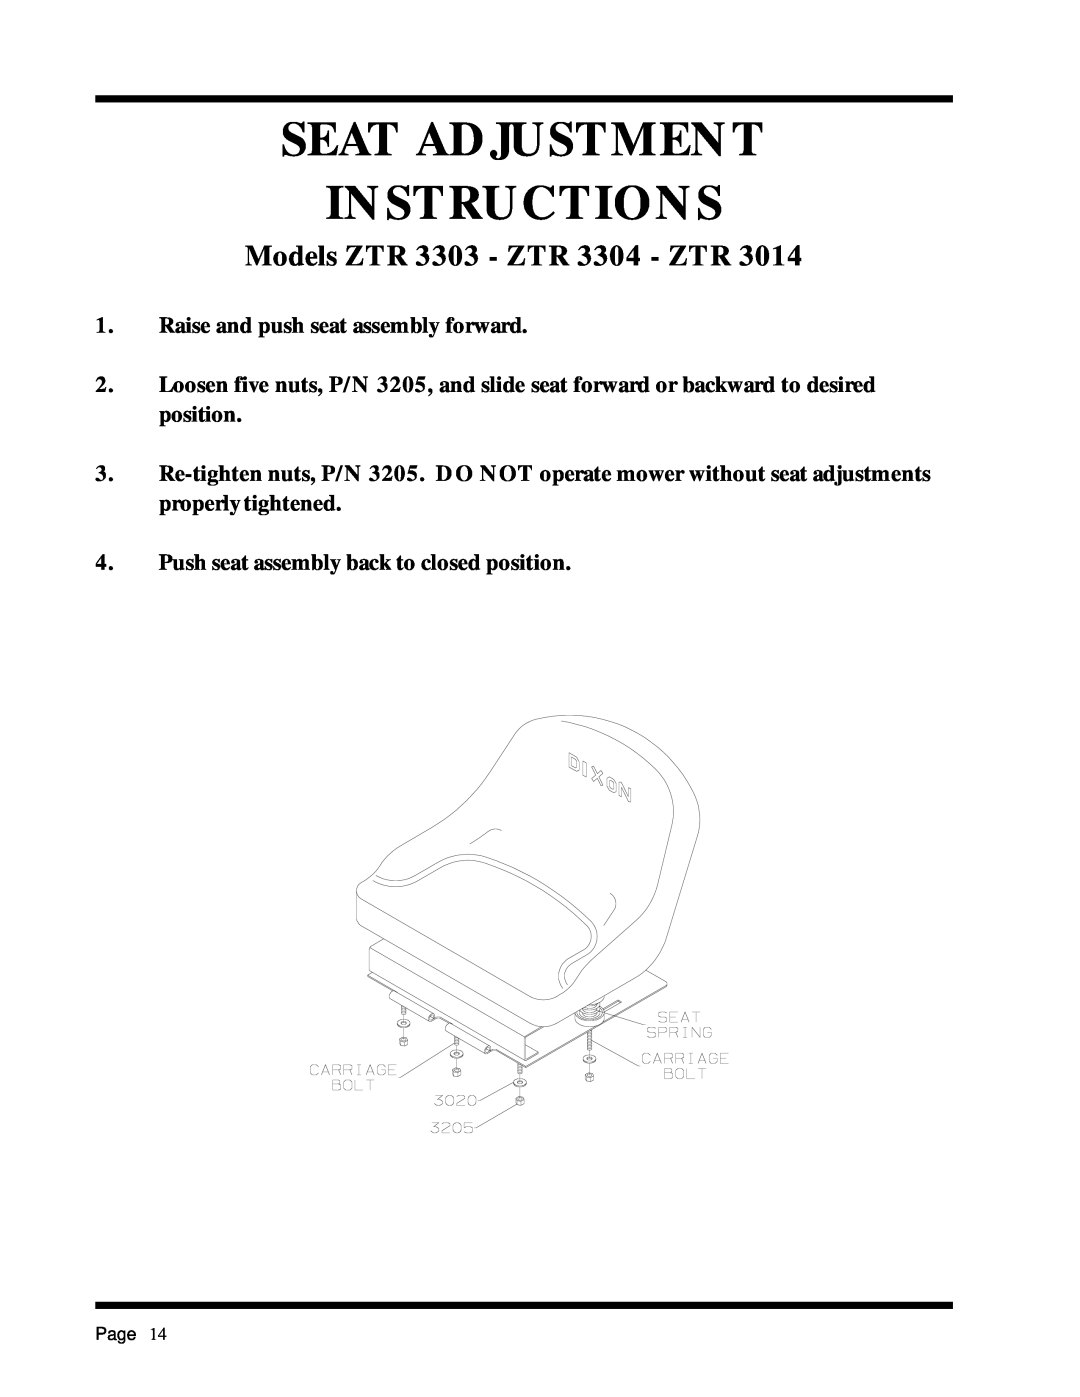 Dixon 6025 manual Seat Adjustment Instructions, Models ZTR 3303 - ZTR 3304 - ZTR, Page 